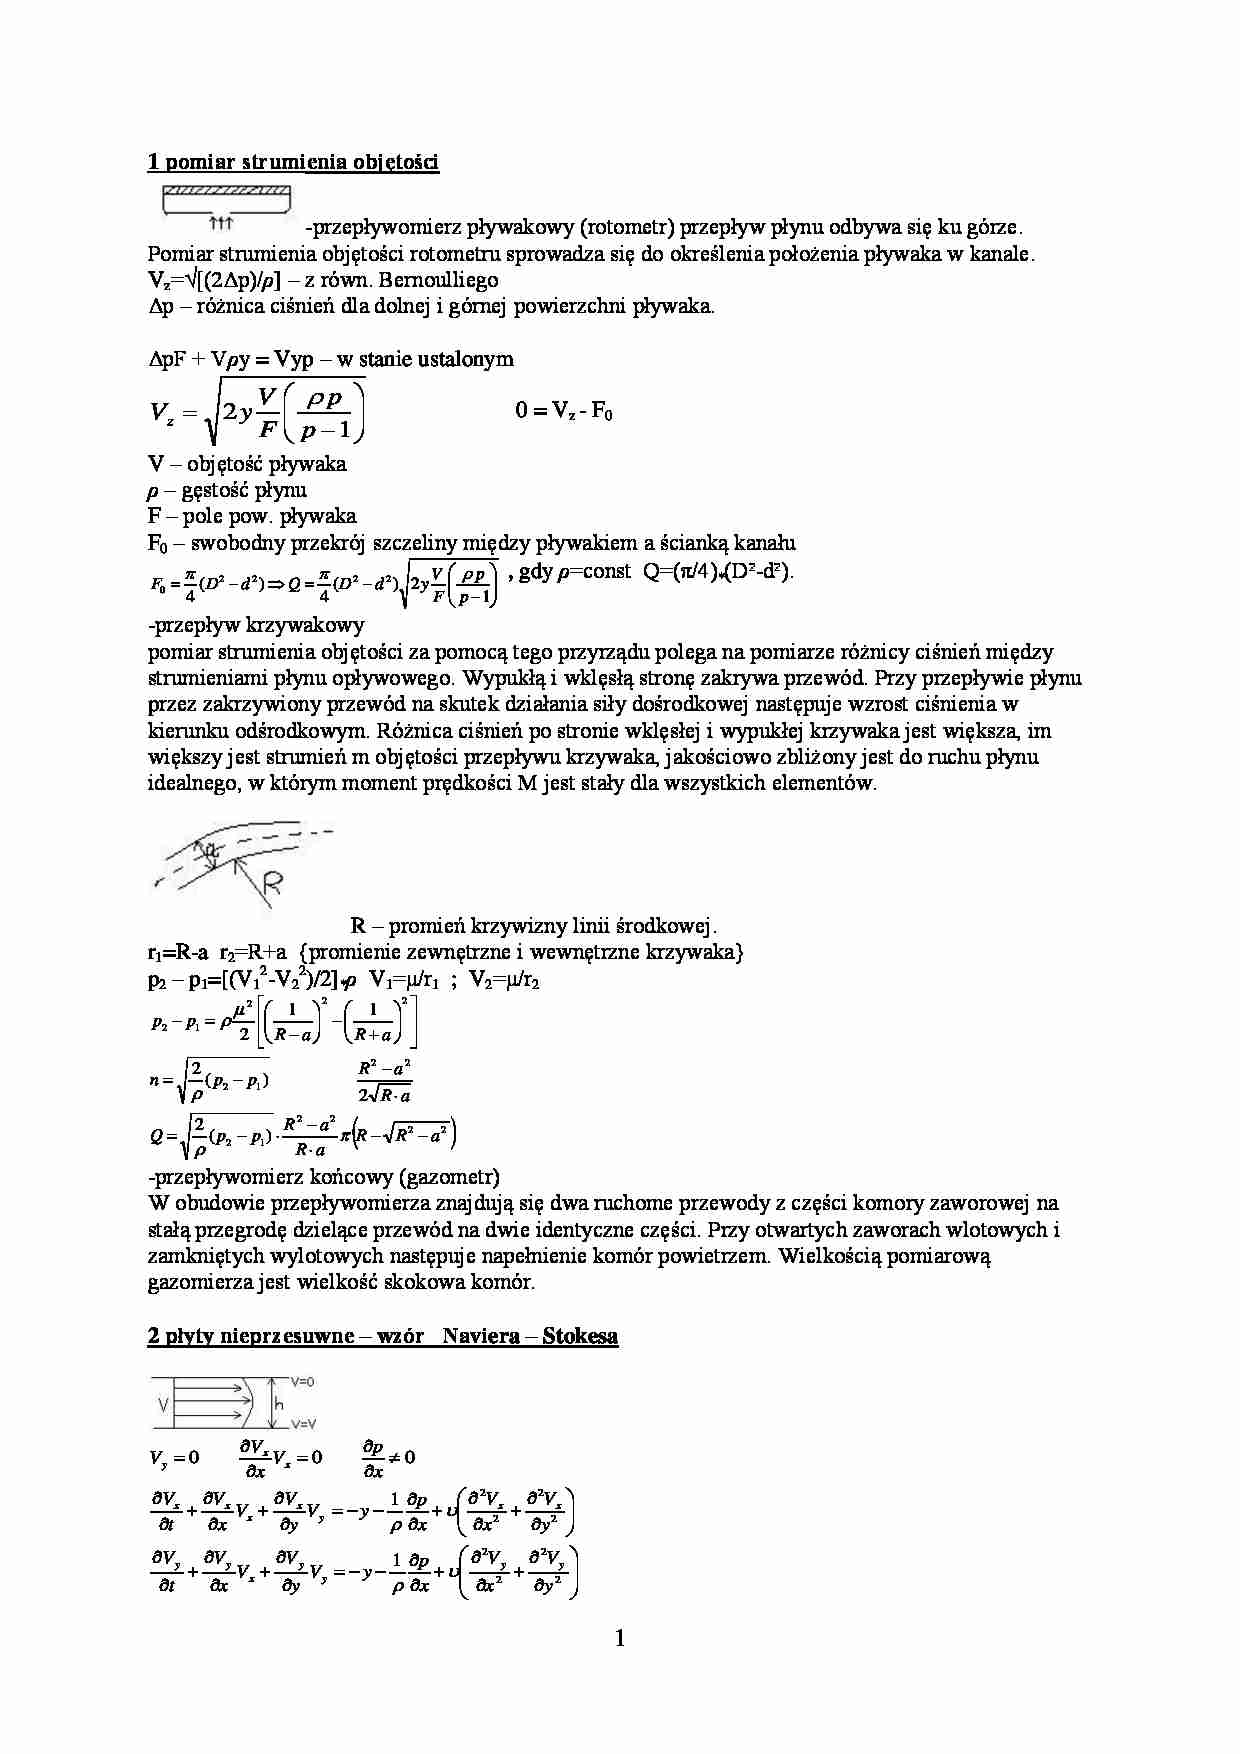 Zagadnienia na egzamin(opracowanie) - strona 1